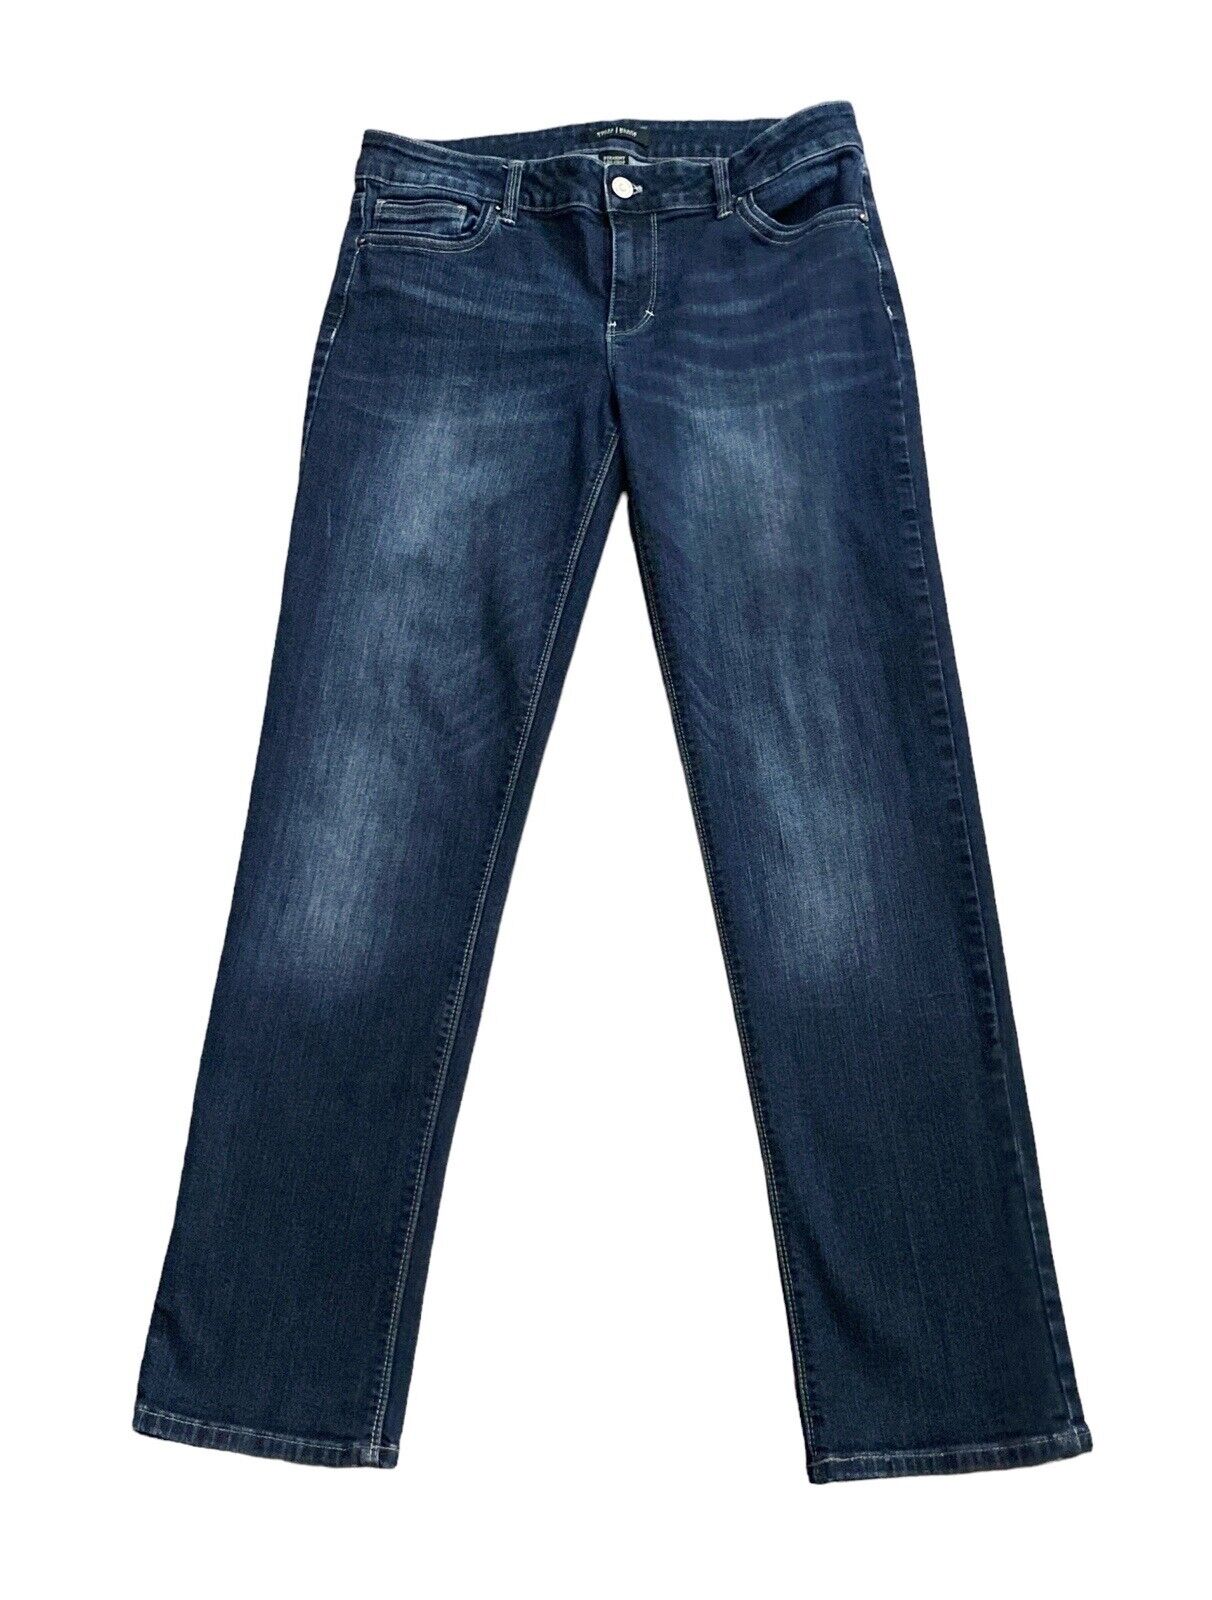 WHITE HOUSE BLACK MARKET Womens Size 6 Straight Leg Crop Blue Jeans 29" Inseam